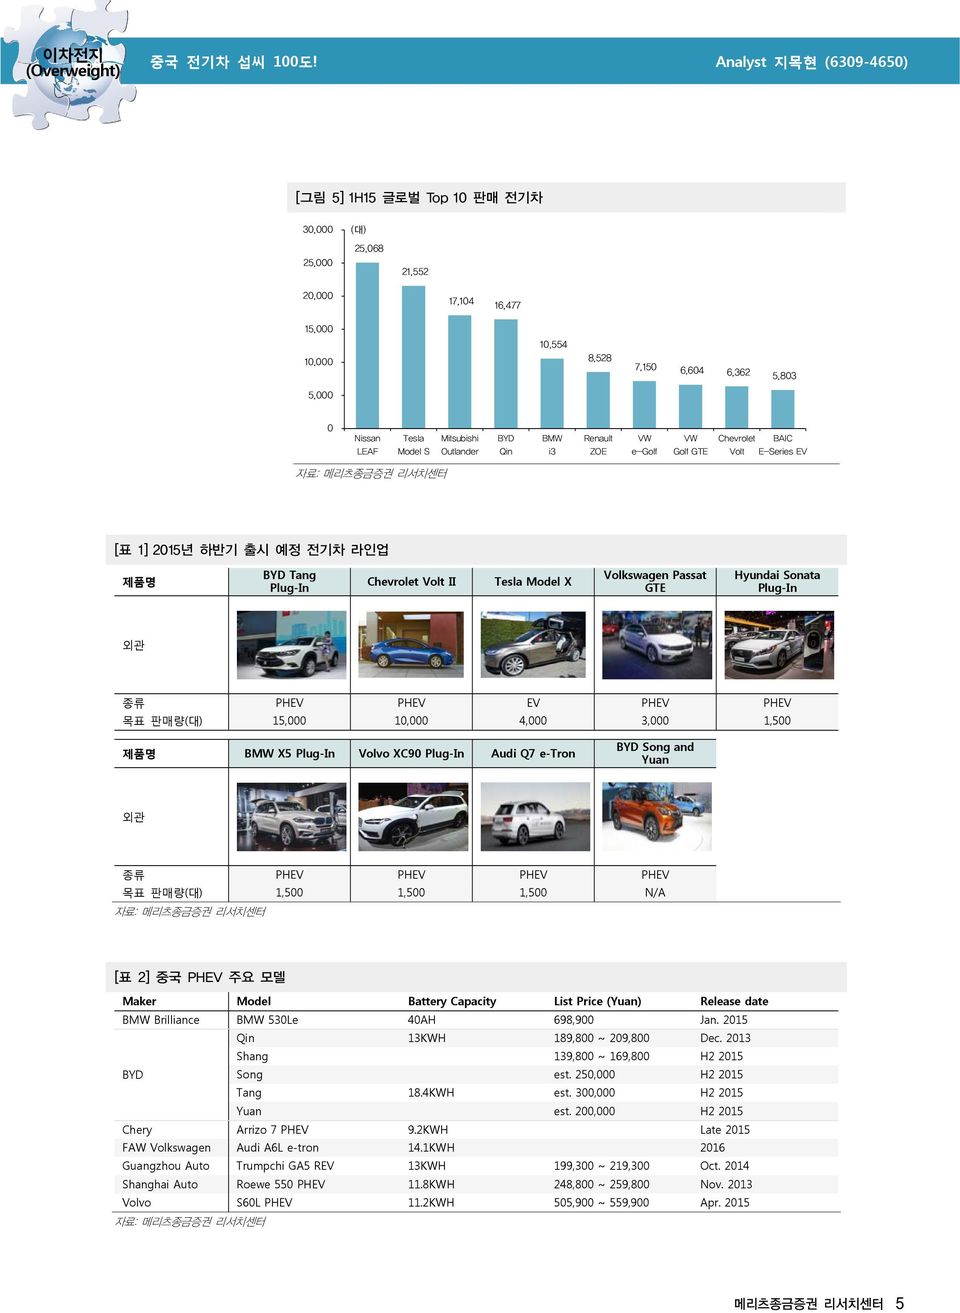 Plug-In 외관 종류 PHEV PHEV EV PHEV PHEV 목표 판매량(대) 15,000 10,000 4,000 3,000 1,500 제품명 BMW X5 Plug-In Volvo XC90 Plug-In Audi Q7 e-tron BYD Song and Yuan 외관 종류 PHEV PHEV PHEV PHEV 목표 판매량(대) 1,500 1,500